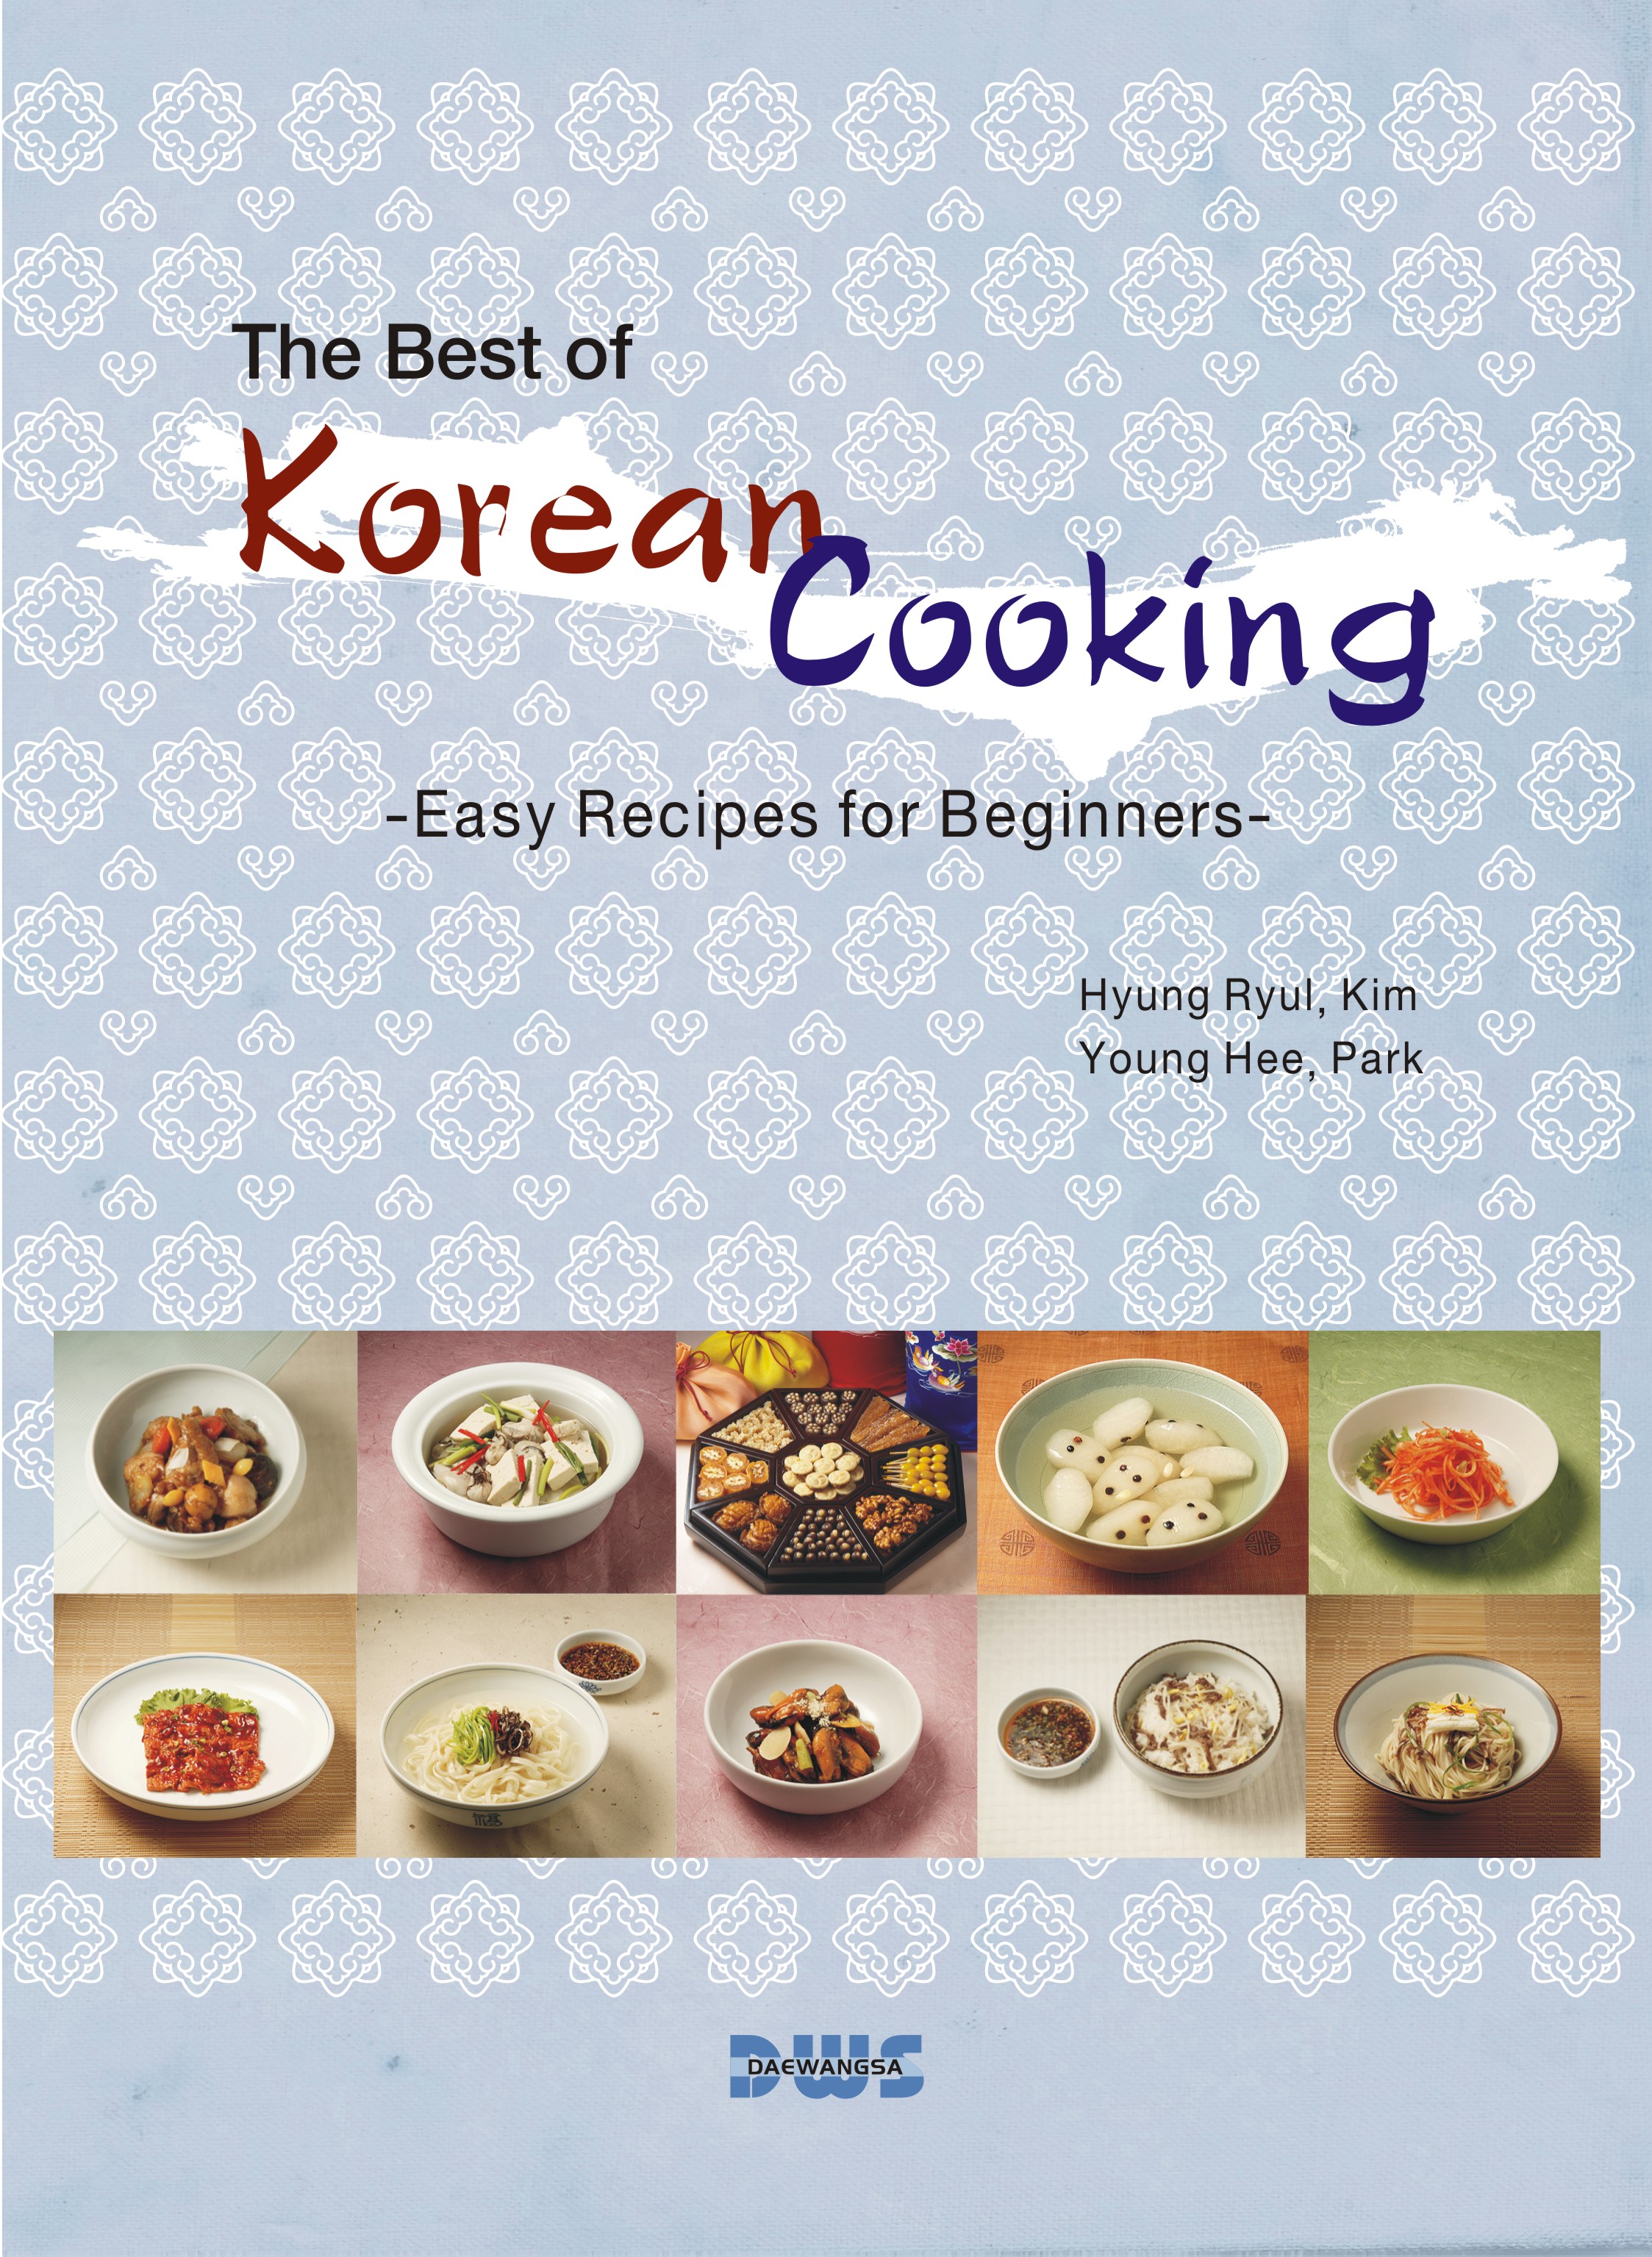 The Best of Korean Cooking